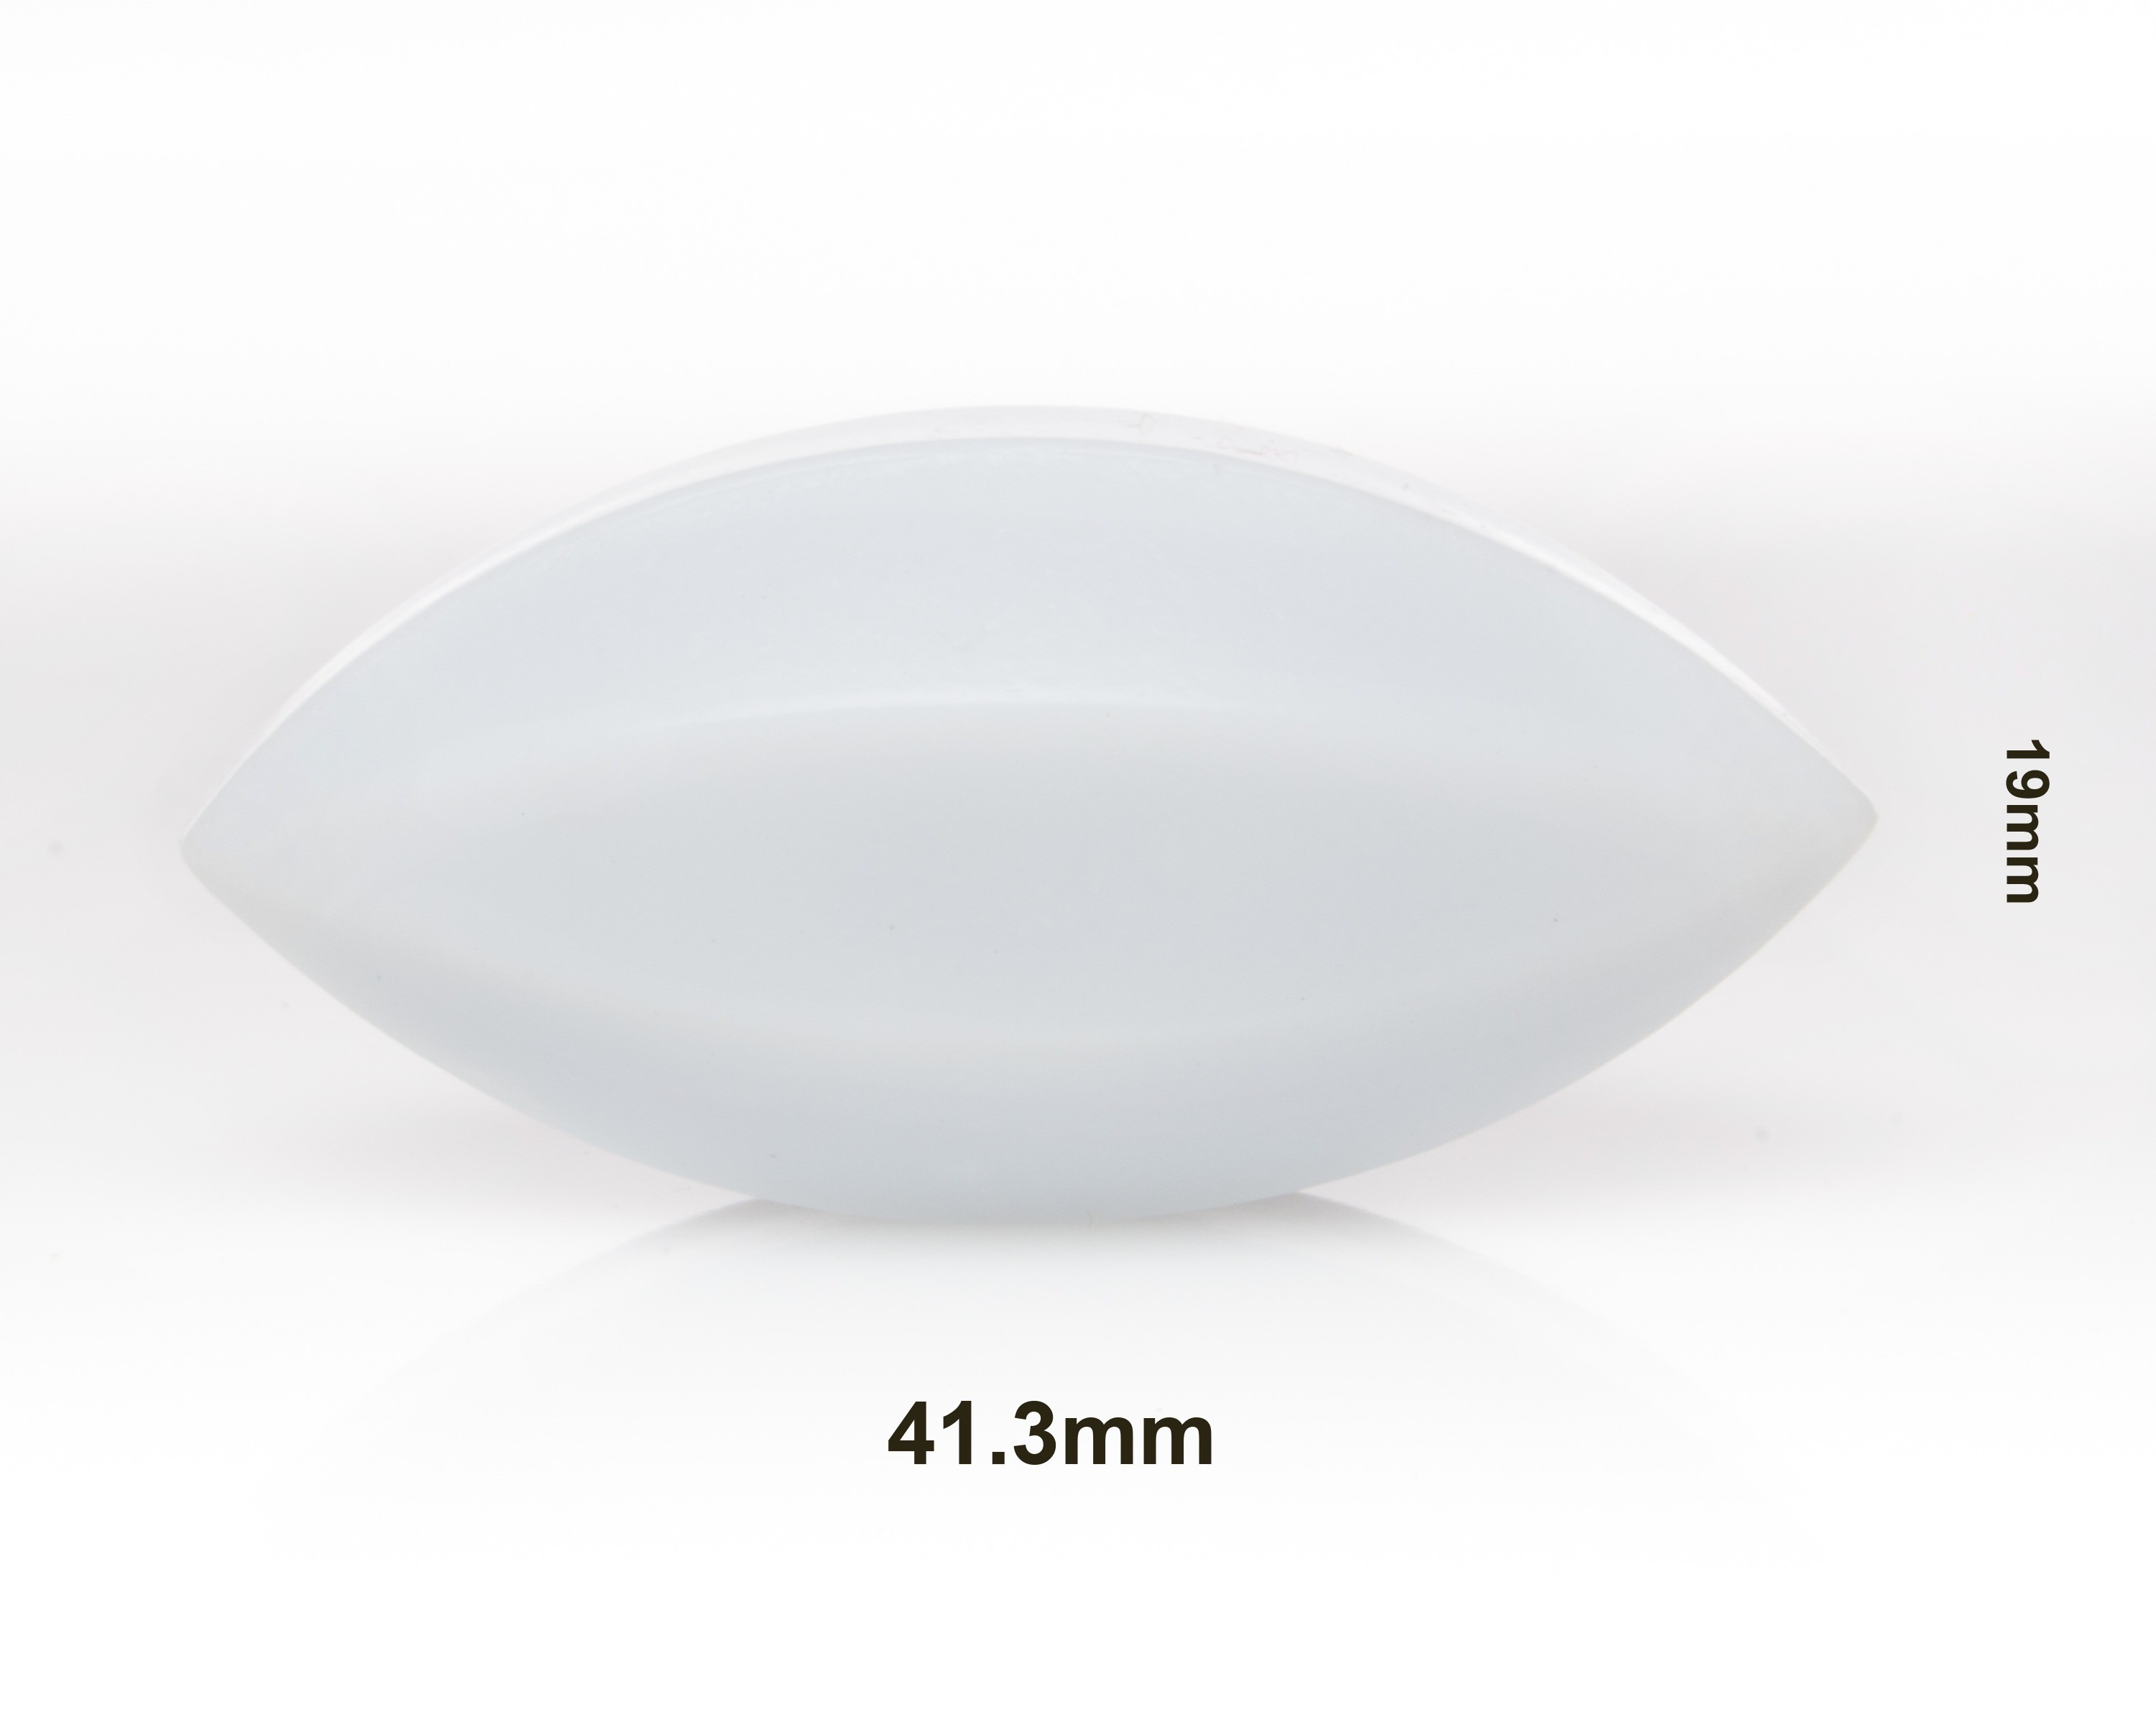 SP Bel-Art Spinbar Teflon Elliptical (Egg-Shaped) Magnetic Stirring Bar; 41.3 x 19mm, White 